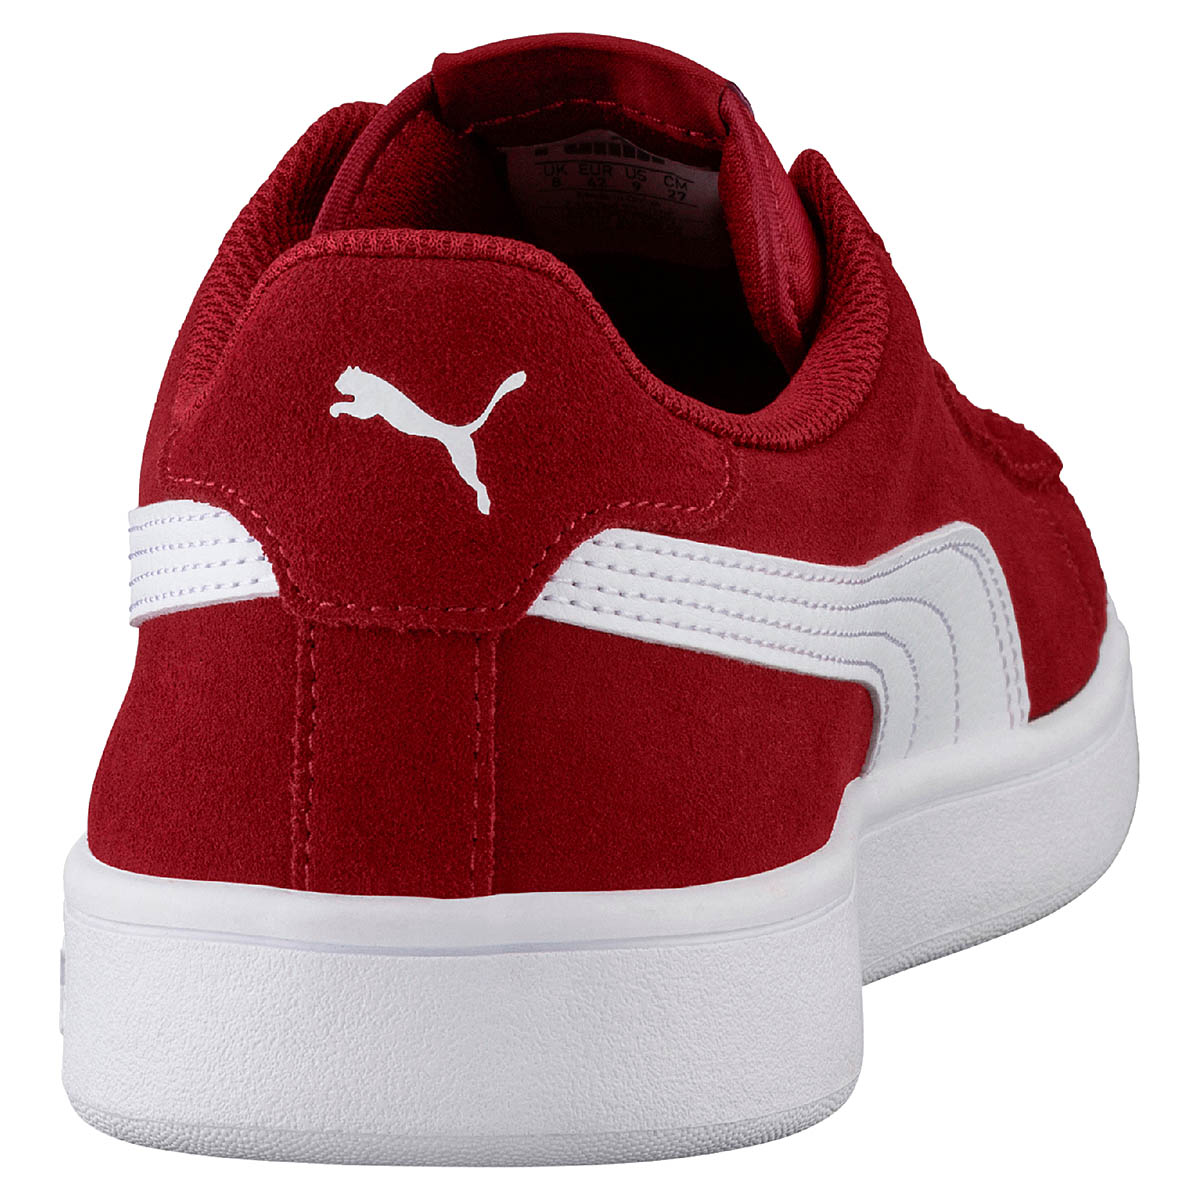 Puma Smash v2 Unisex Sneaker Schuh rot 364989 06